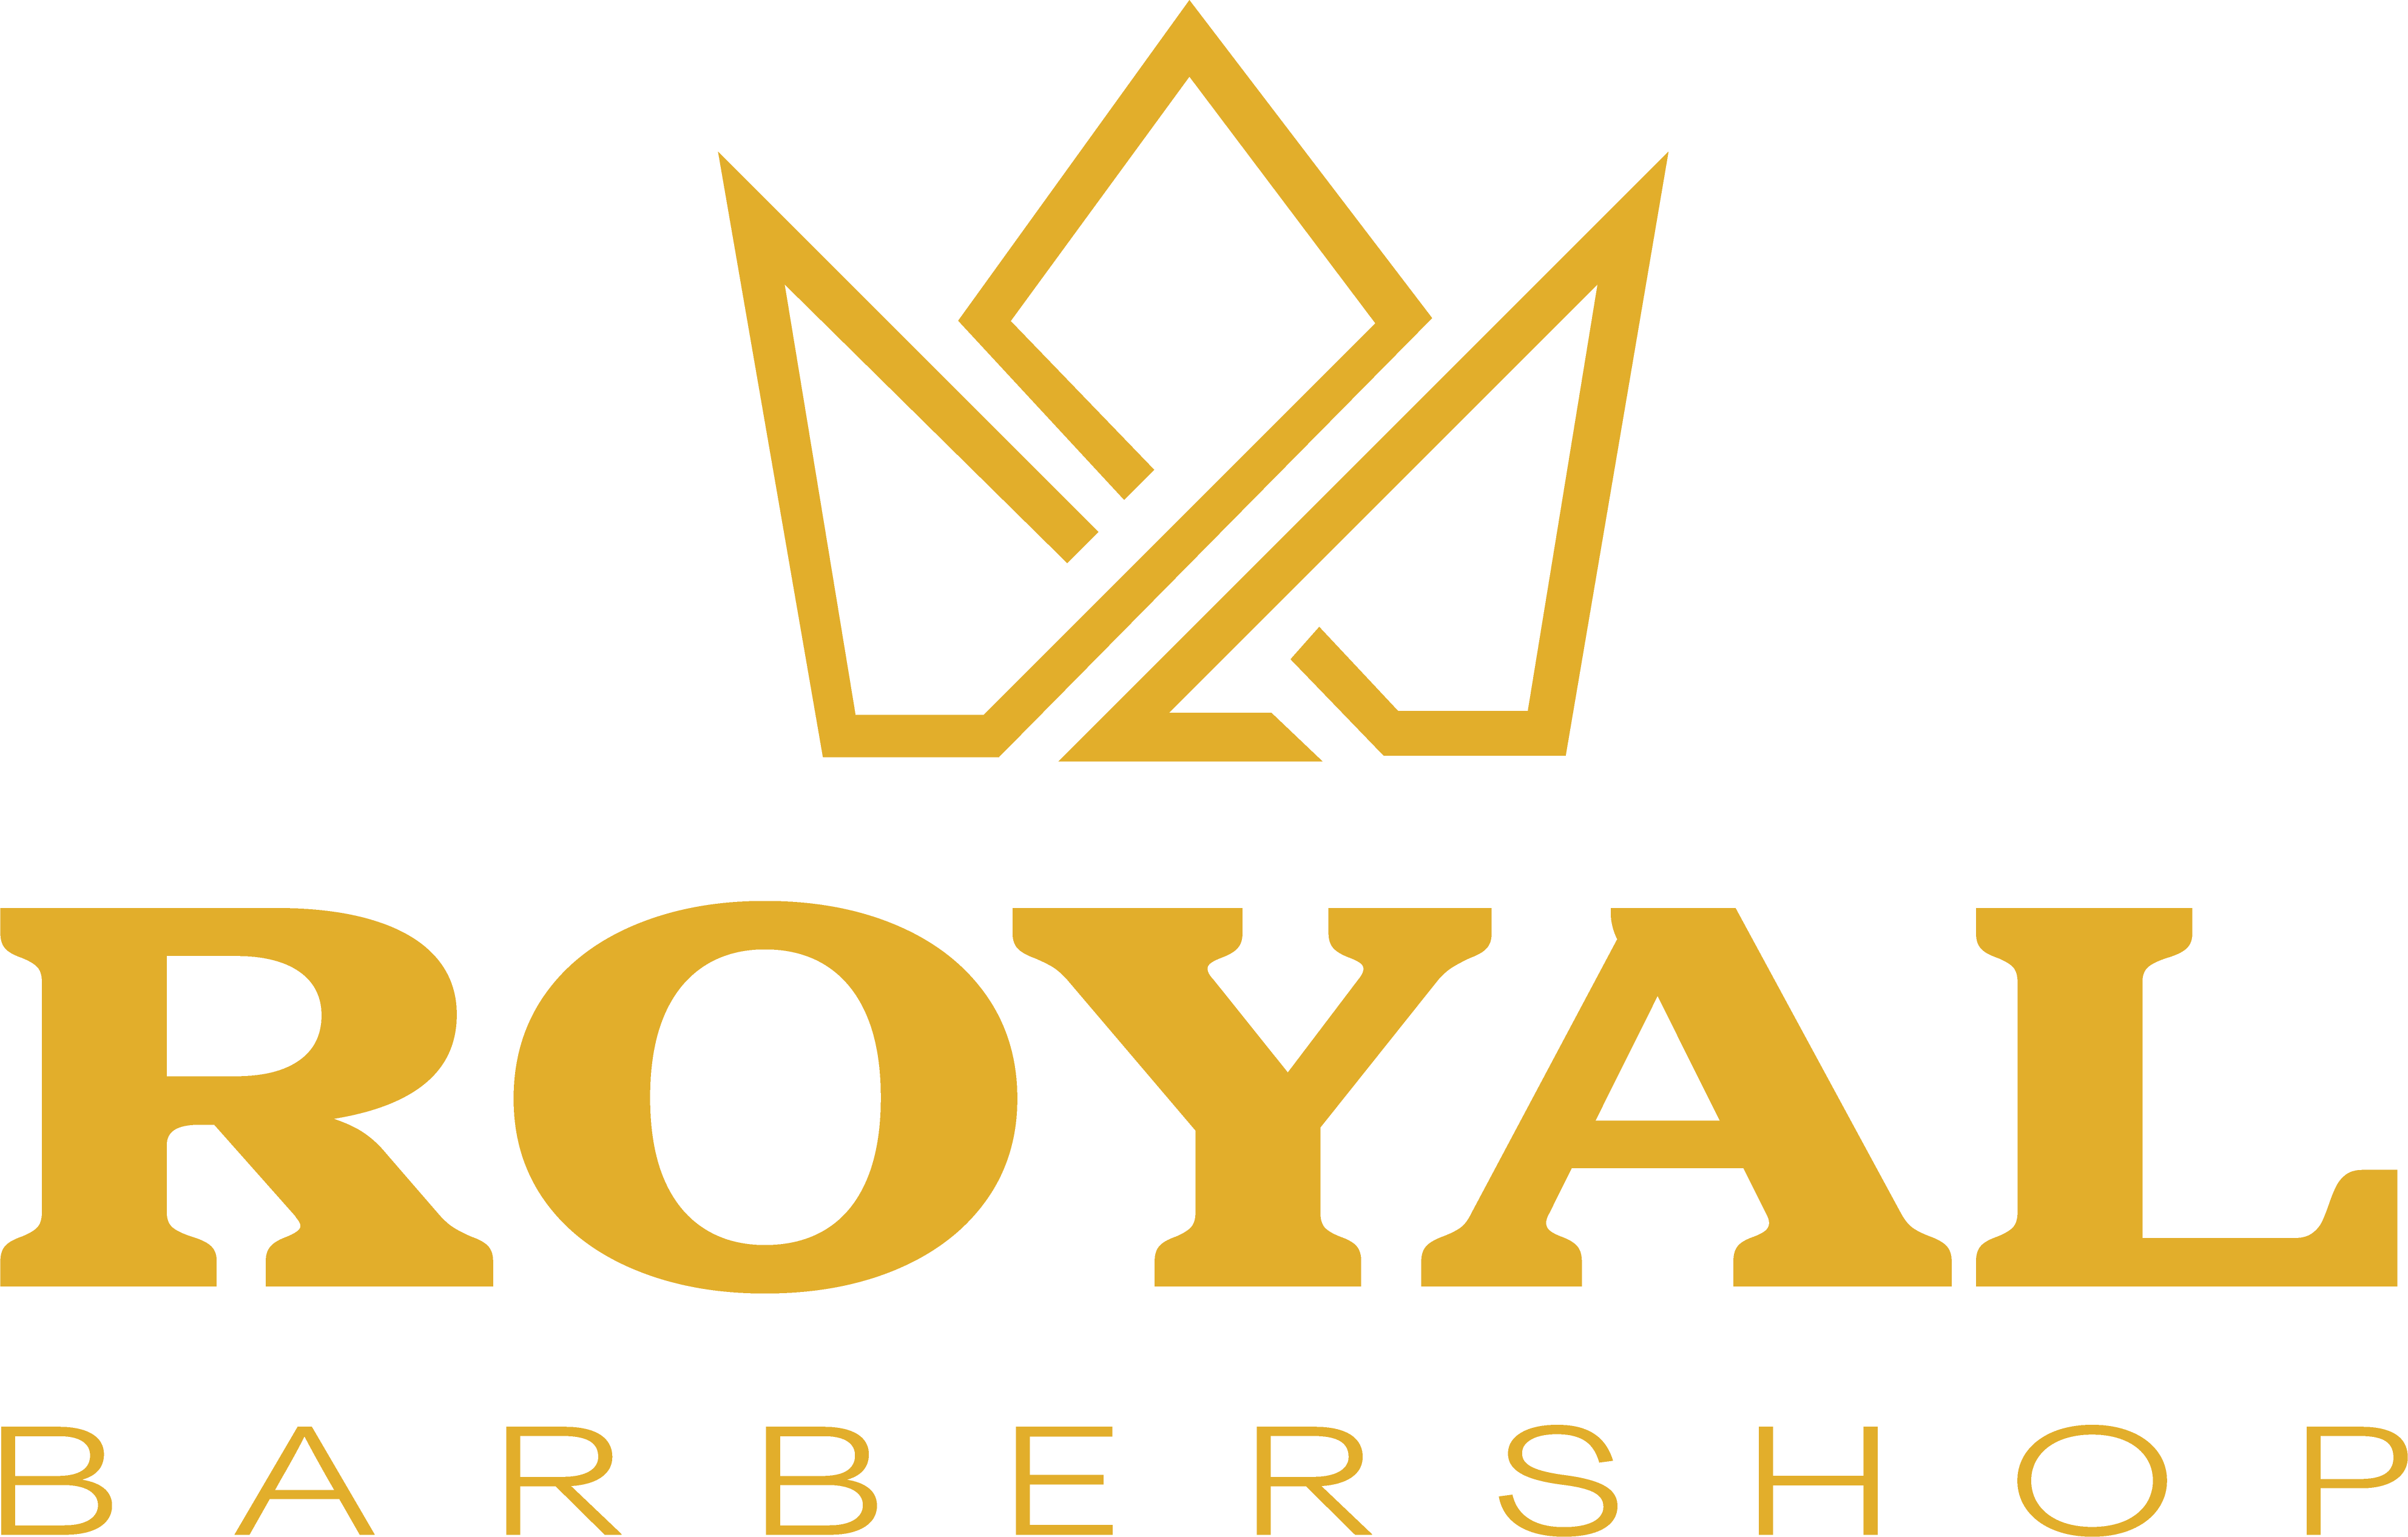 The Royal Barbershop